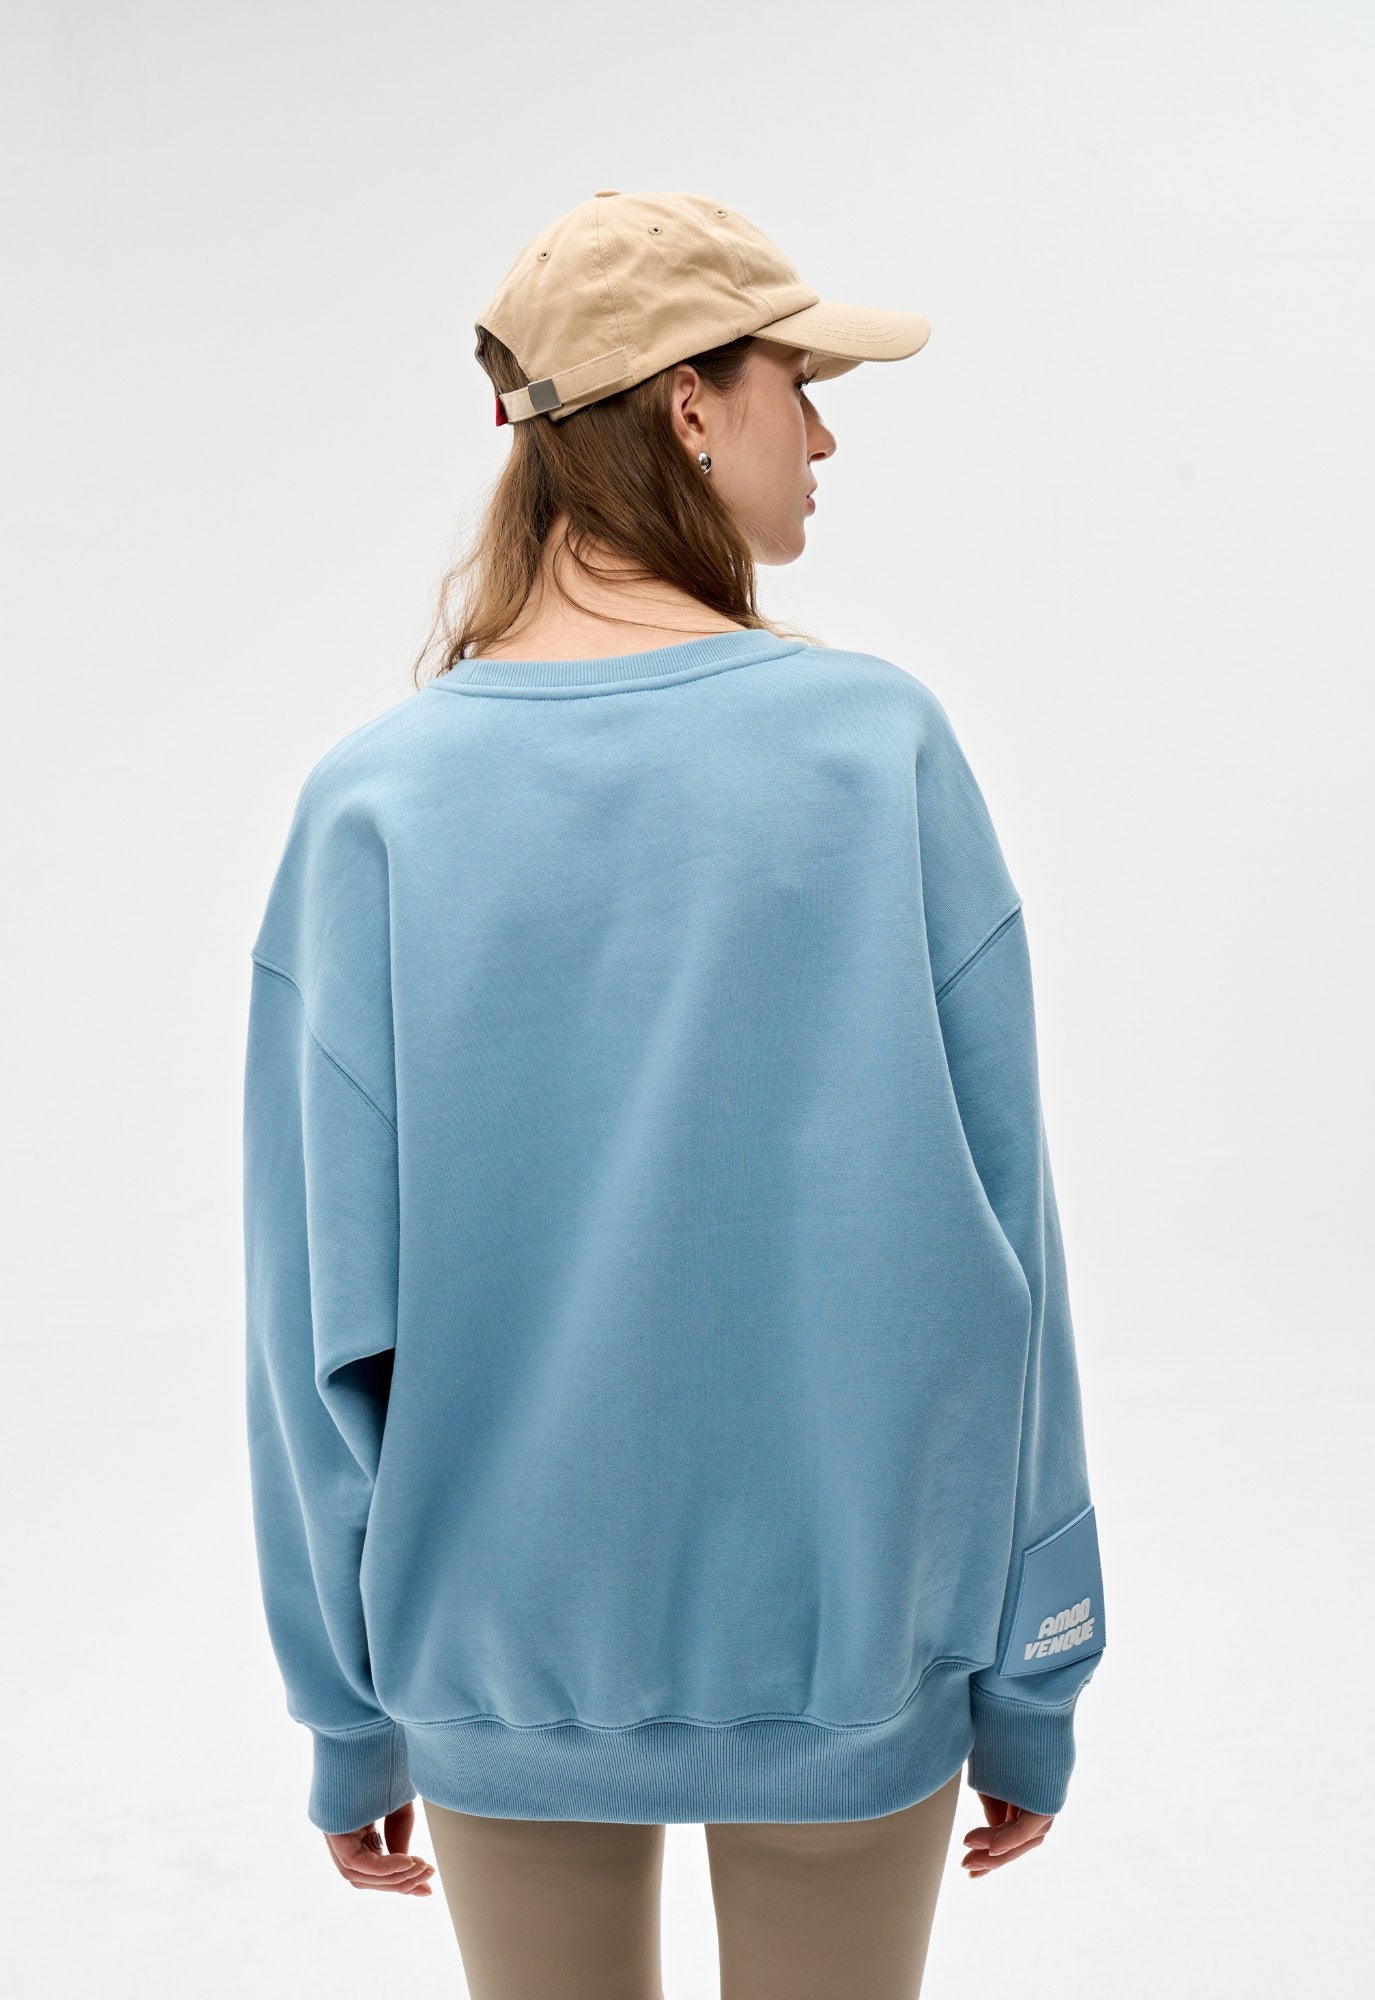 "Pixel" Fog Blue Sweatshirt